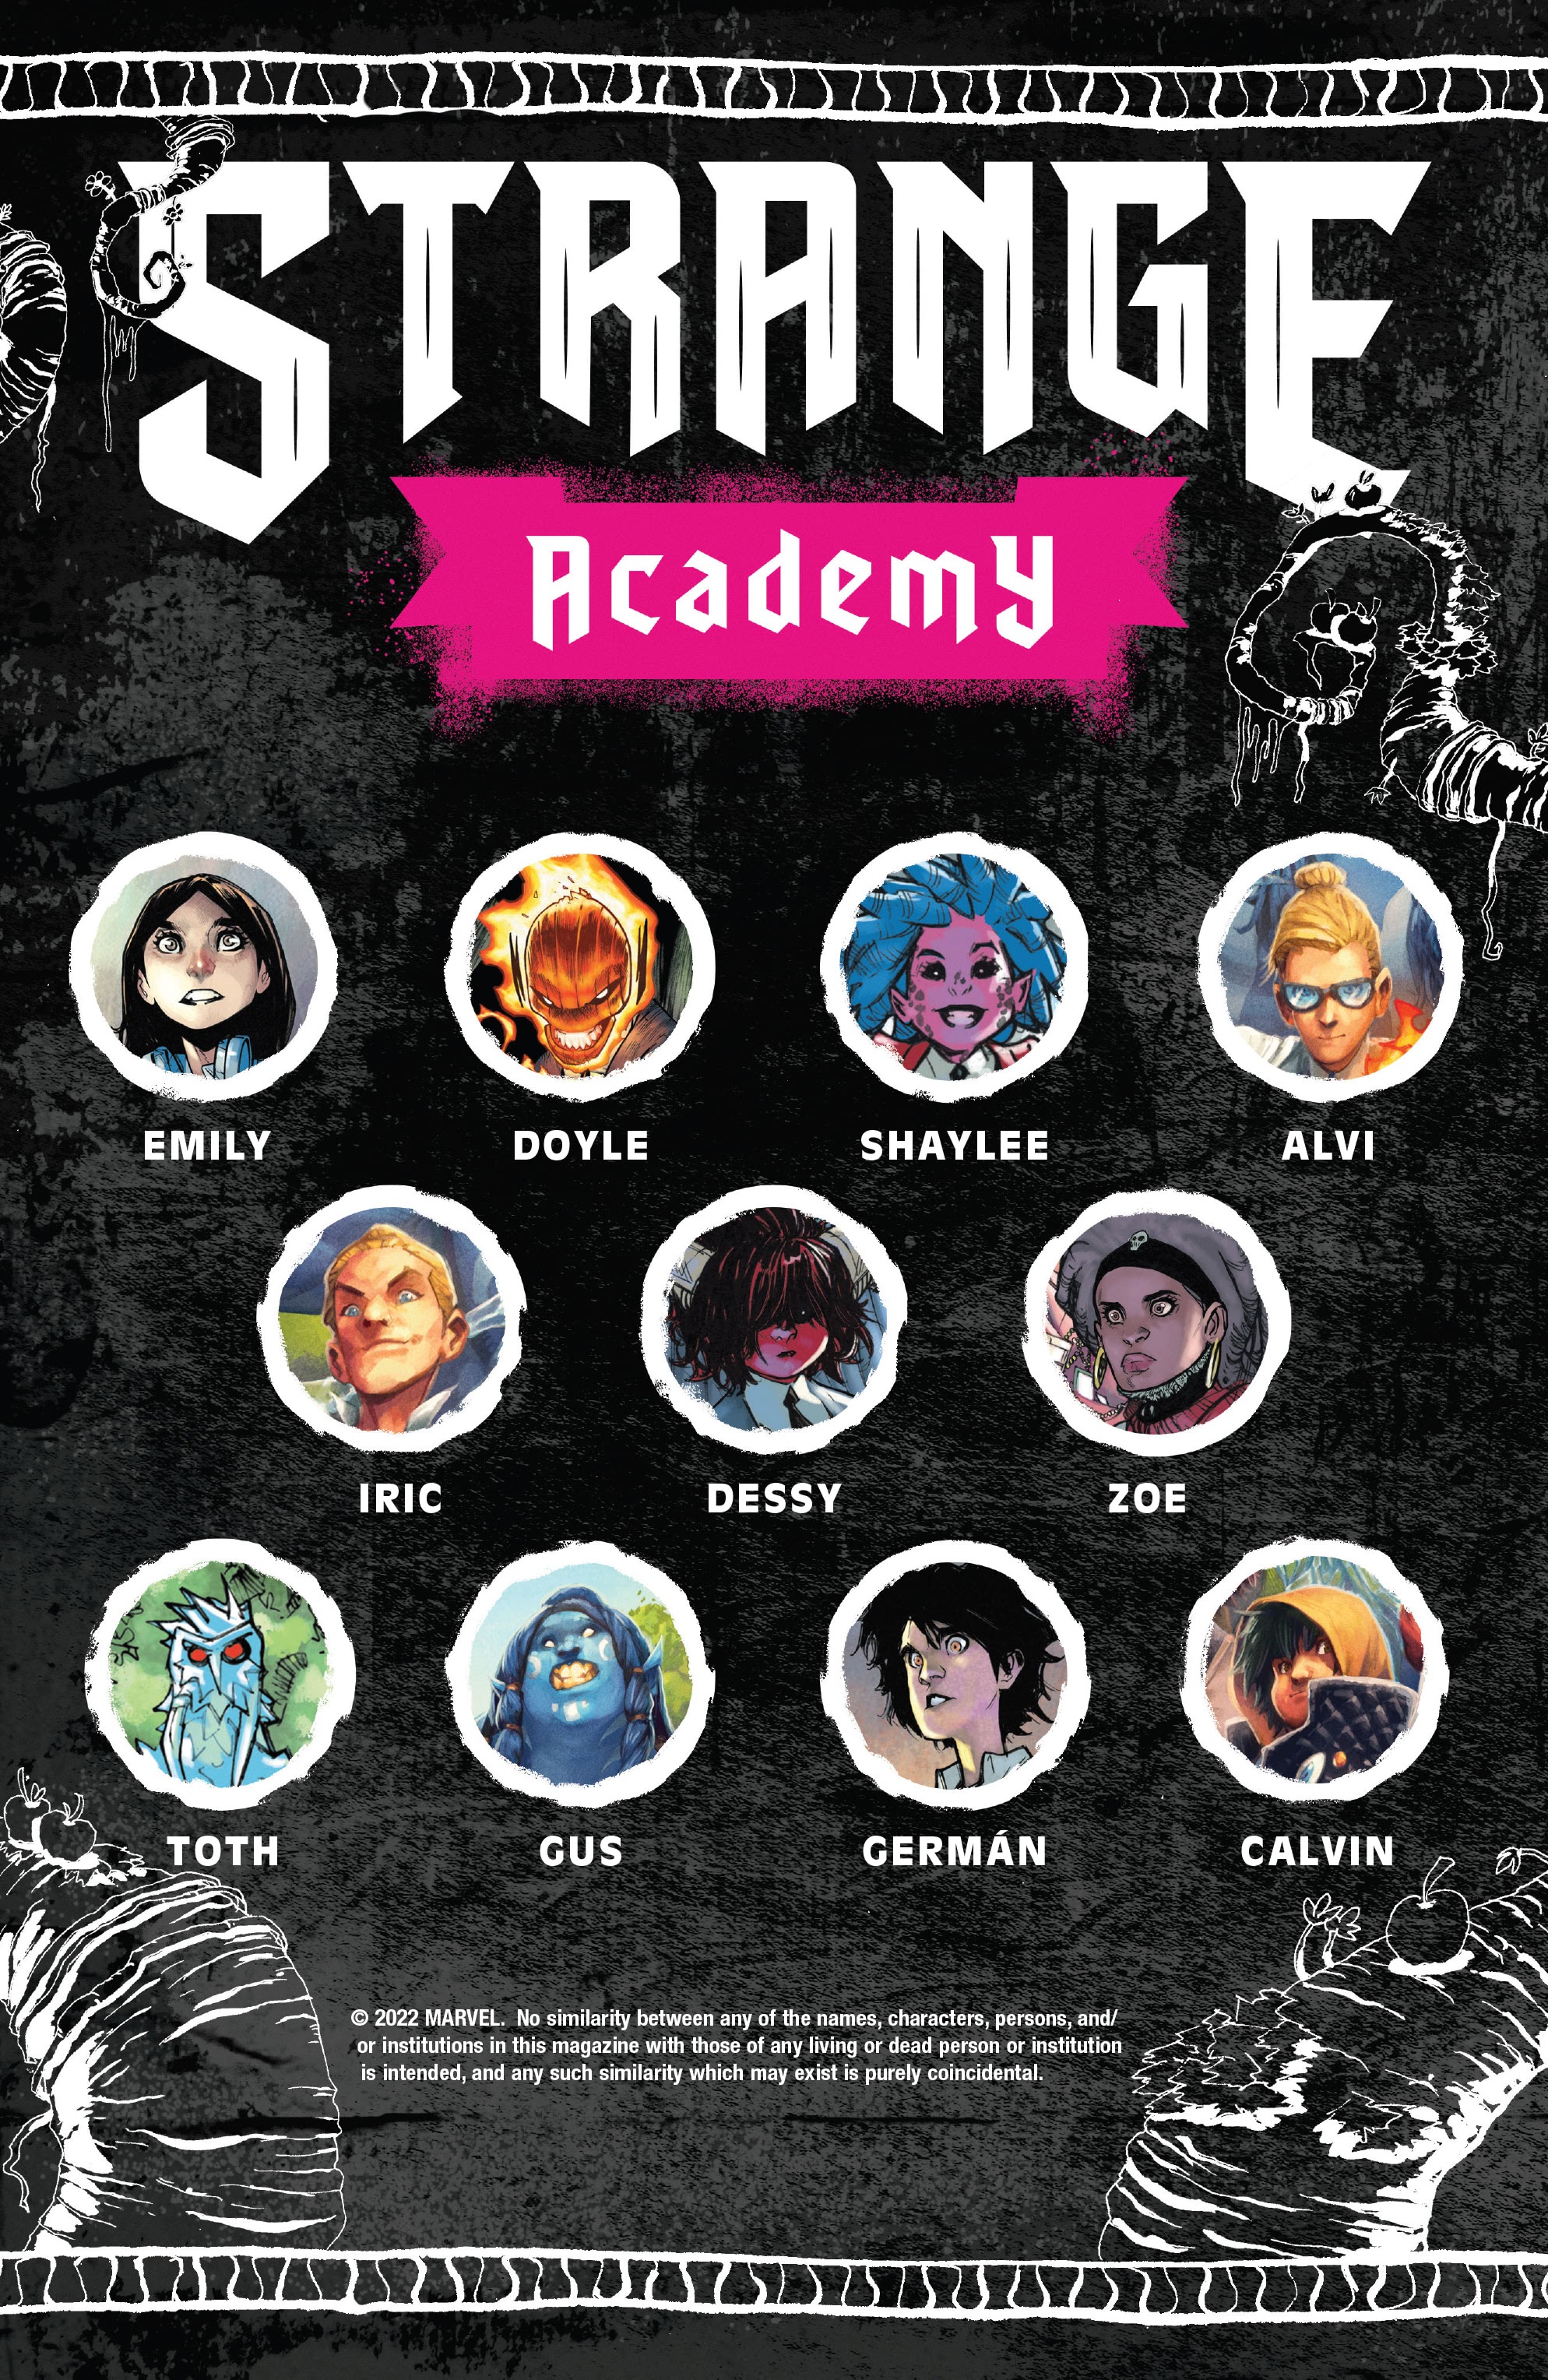 Read online Strange Academy comic -  Issue #16 - 5